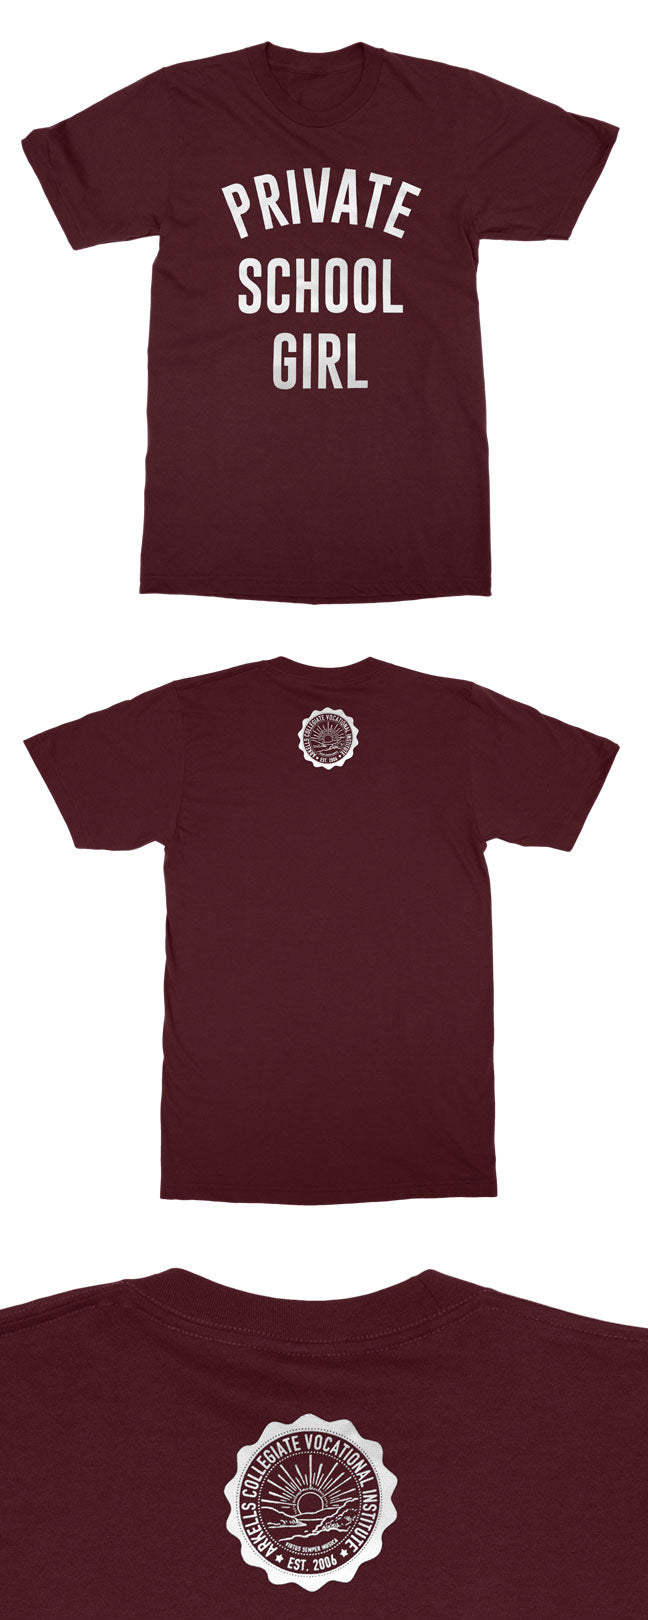 Arkells - Private School Girl - Burgundy T-Shirt